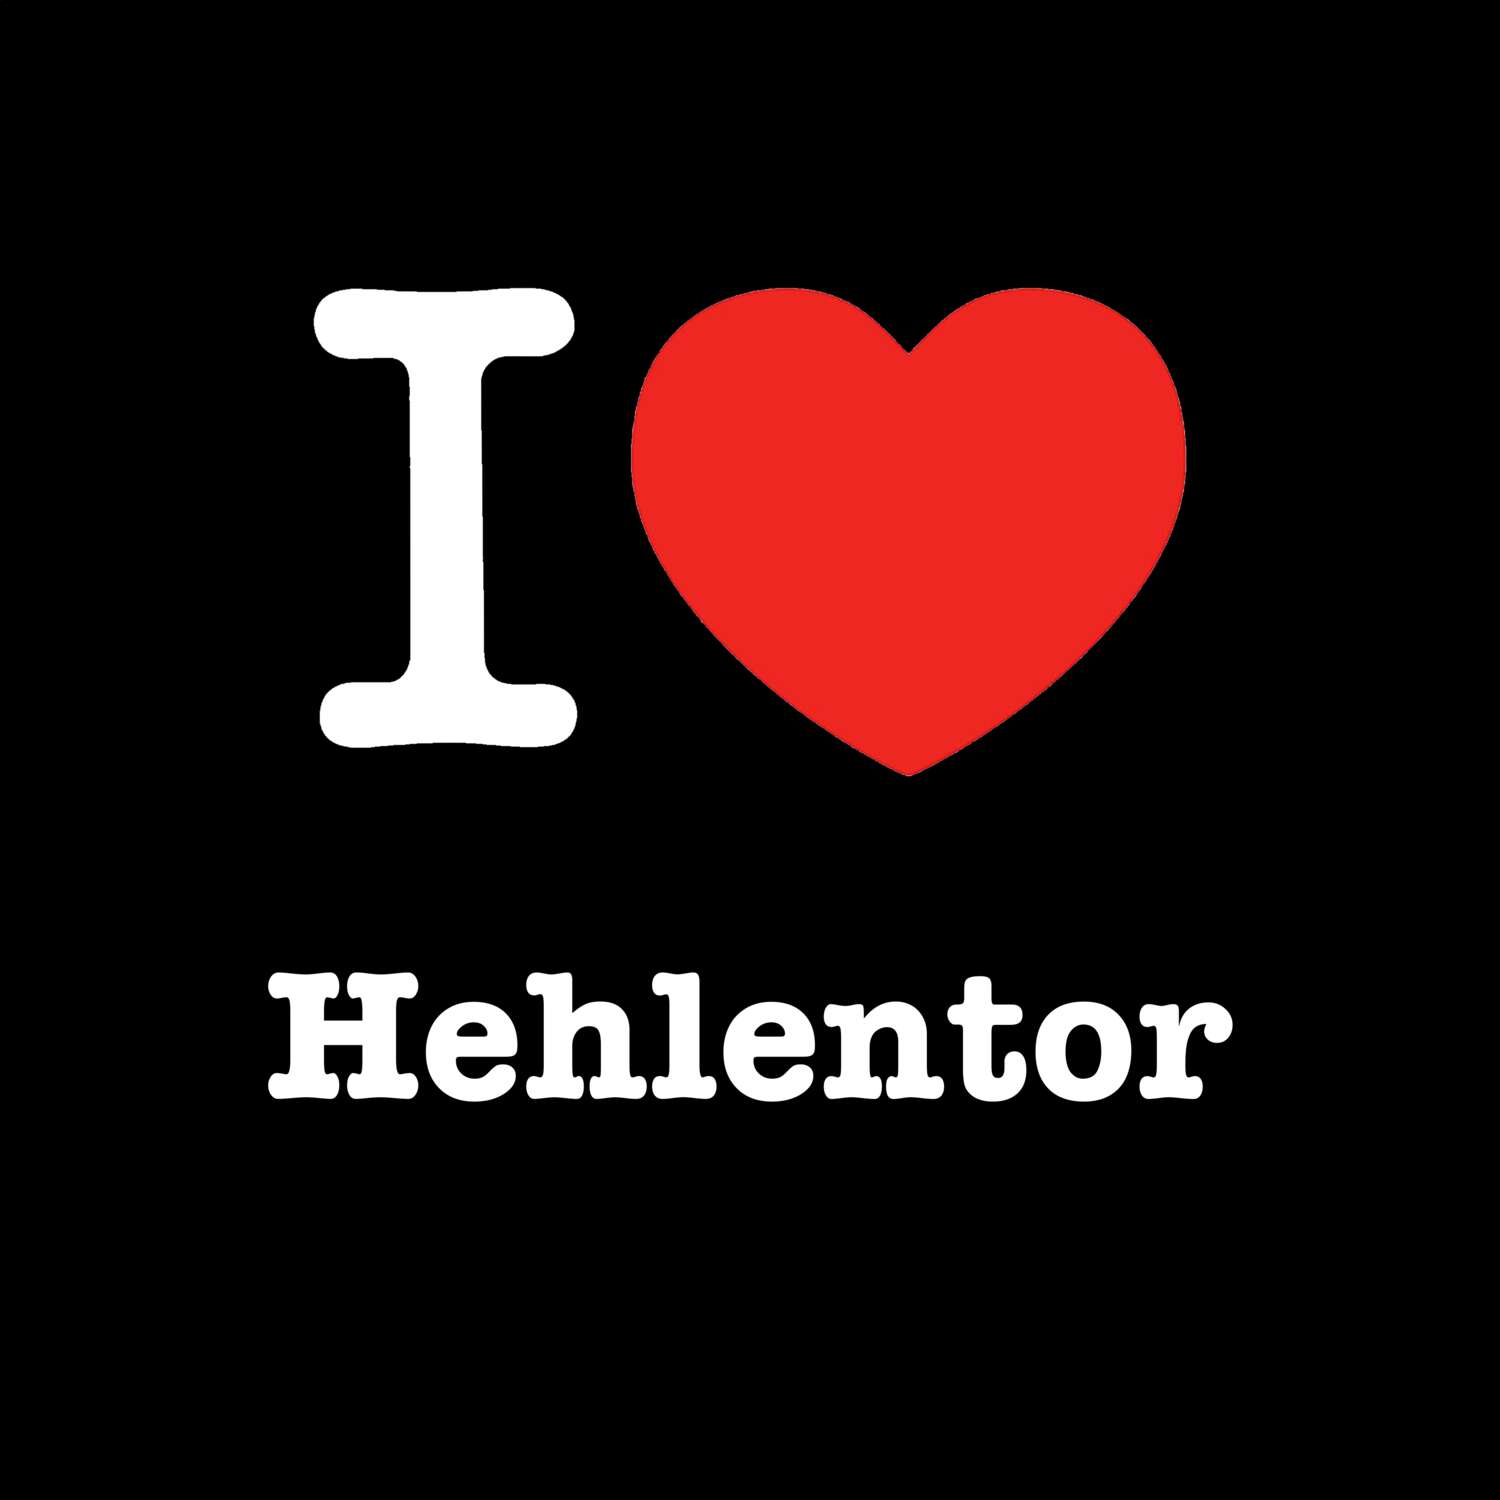 Hehlentor T-Shirt »I love«